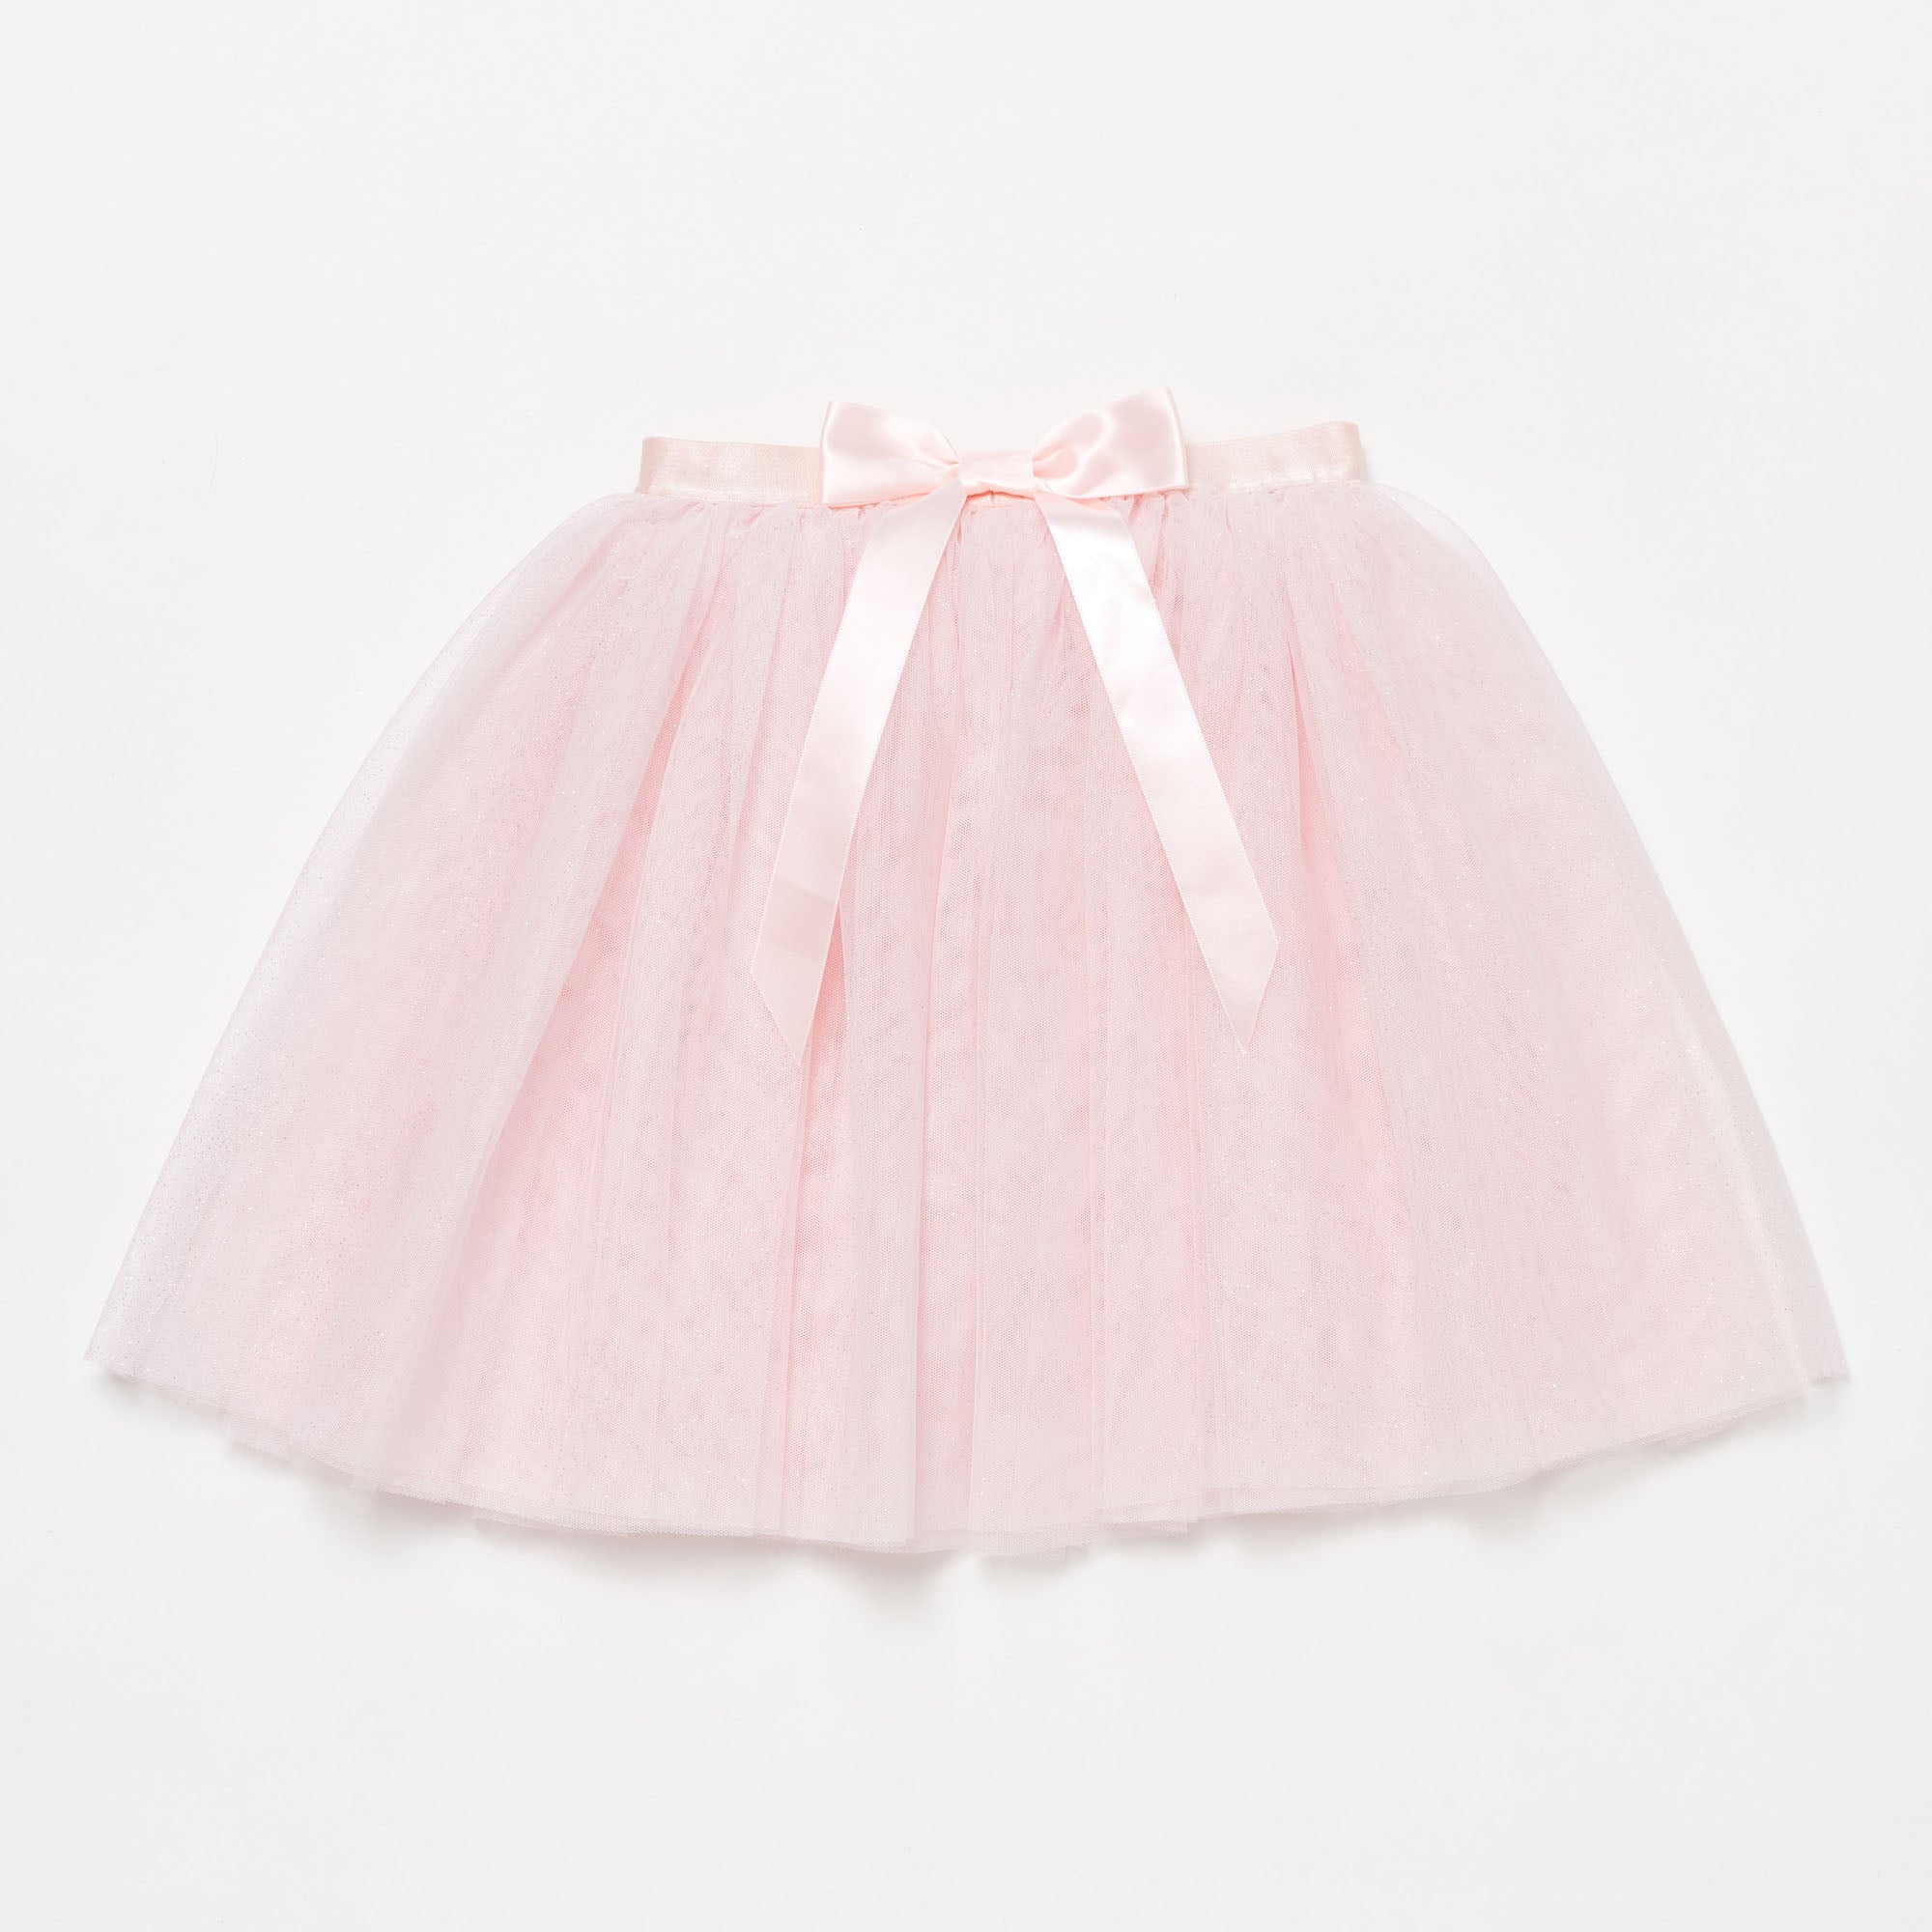 Flo Dancewear Girls Long Glitter Tulle Tutu Skirt with Bow in Ballet Pink